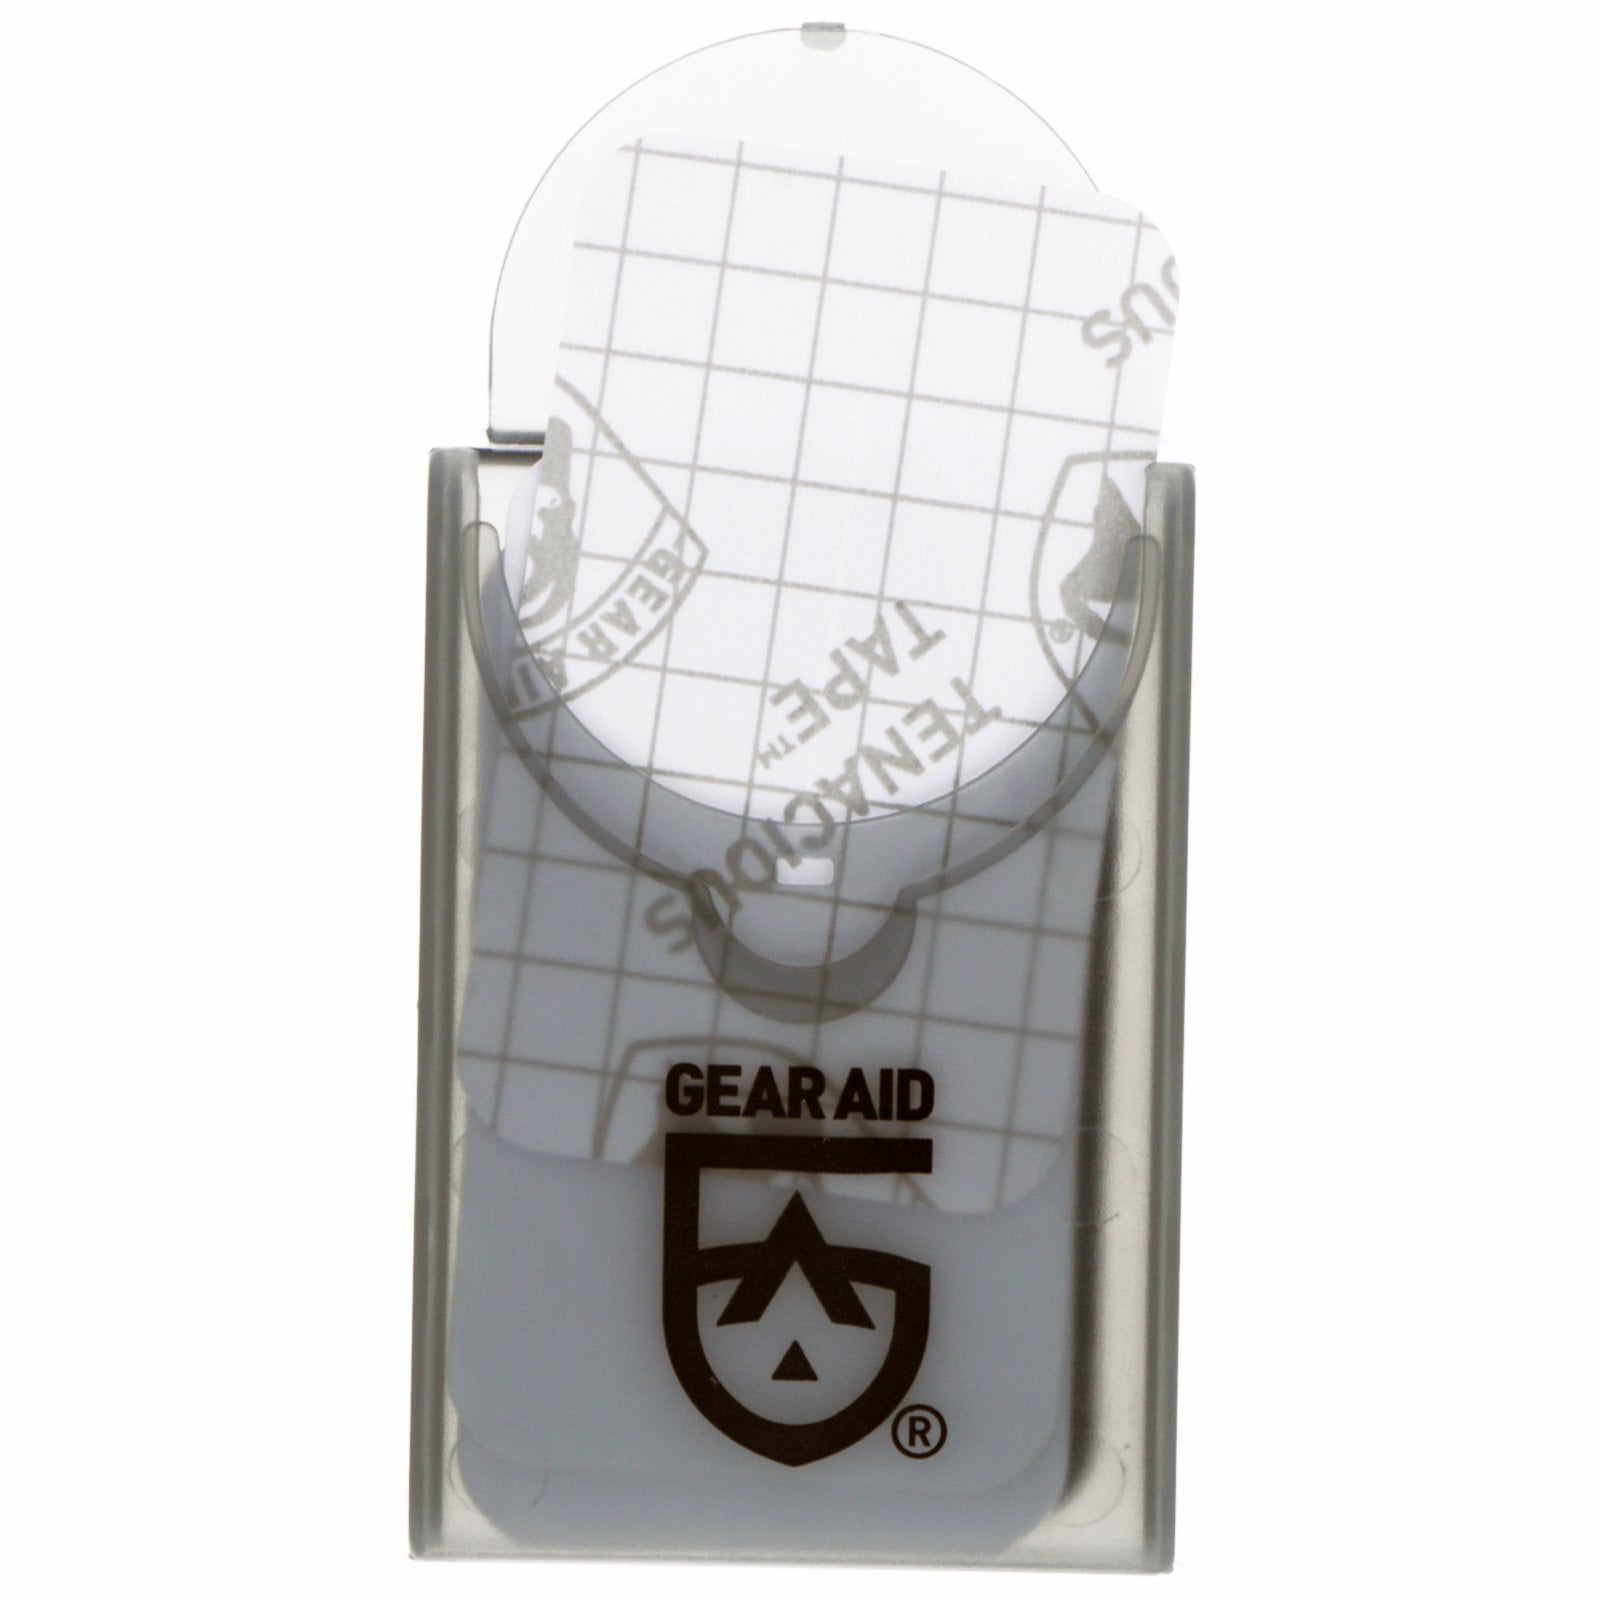 GEAR AID Tenacious Tape Mini Patches for Down Jacket Repair, Black 1.5”x2.5”